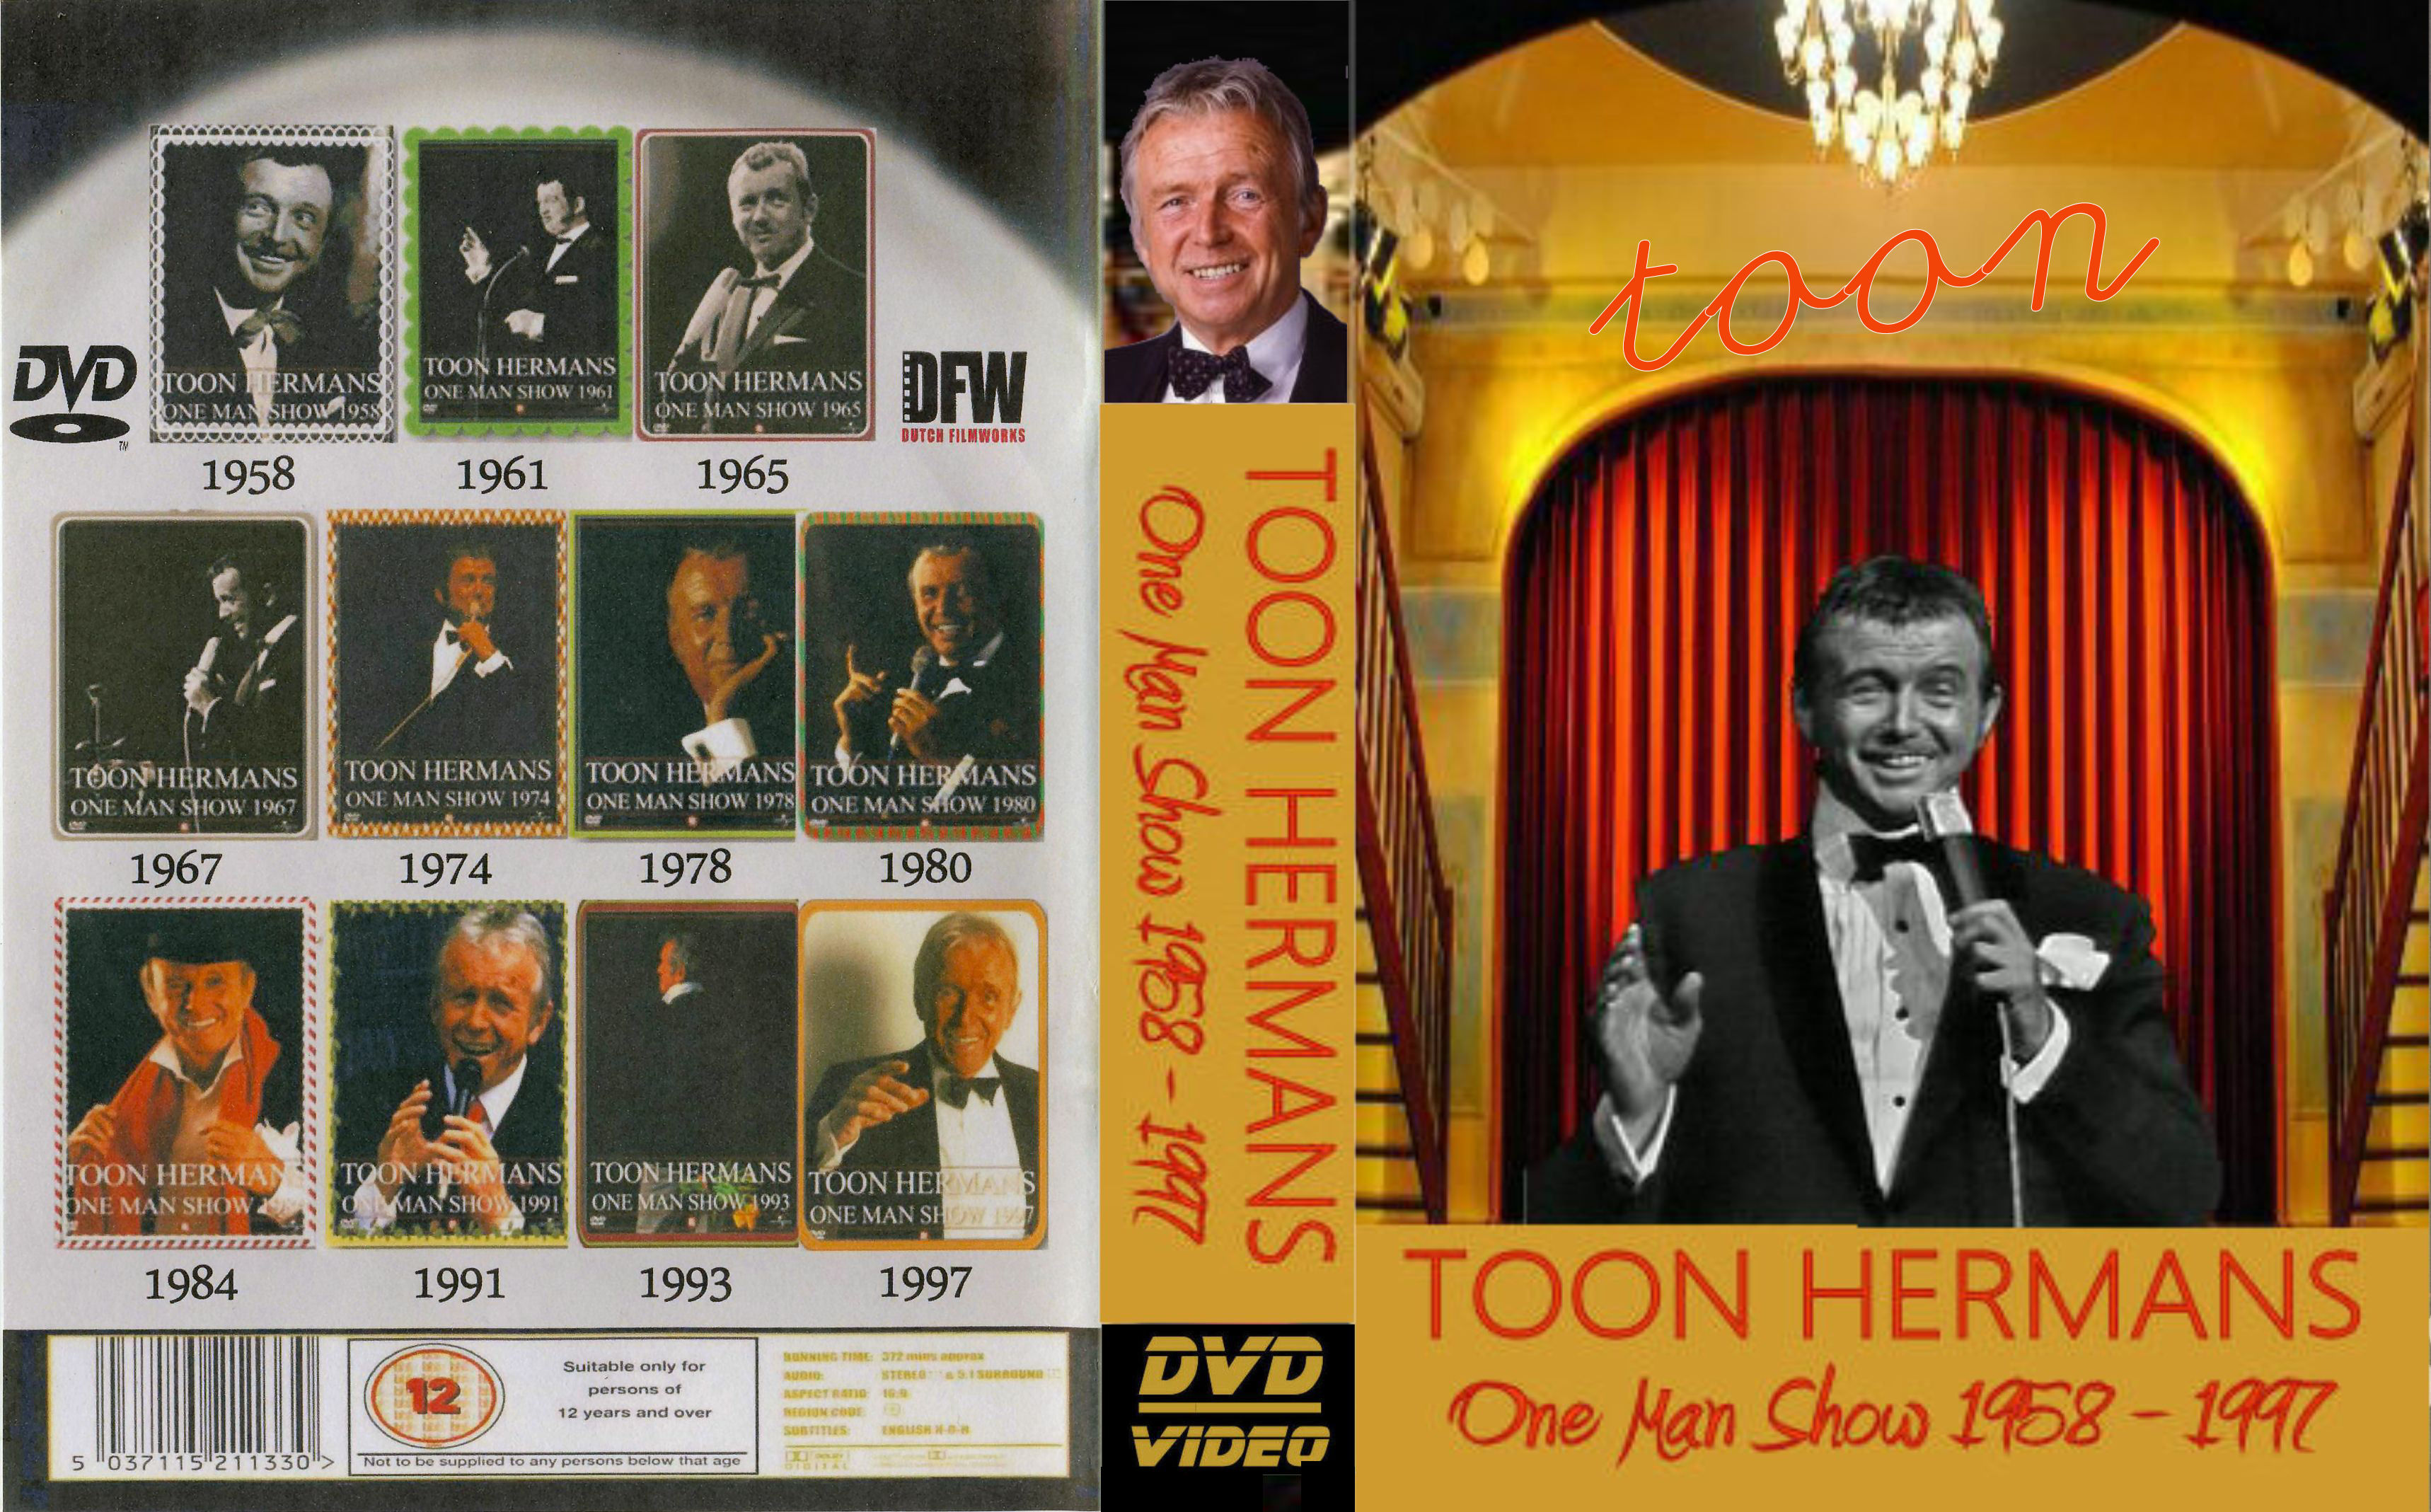 Toon Hermans One Man Show 1958 - 1997 DvD 8 (1984)